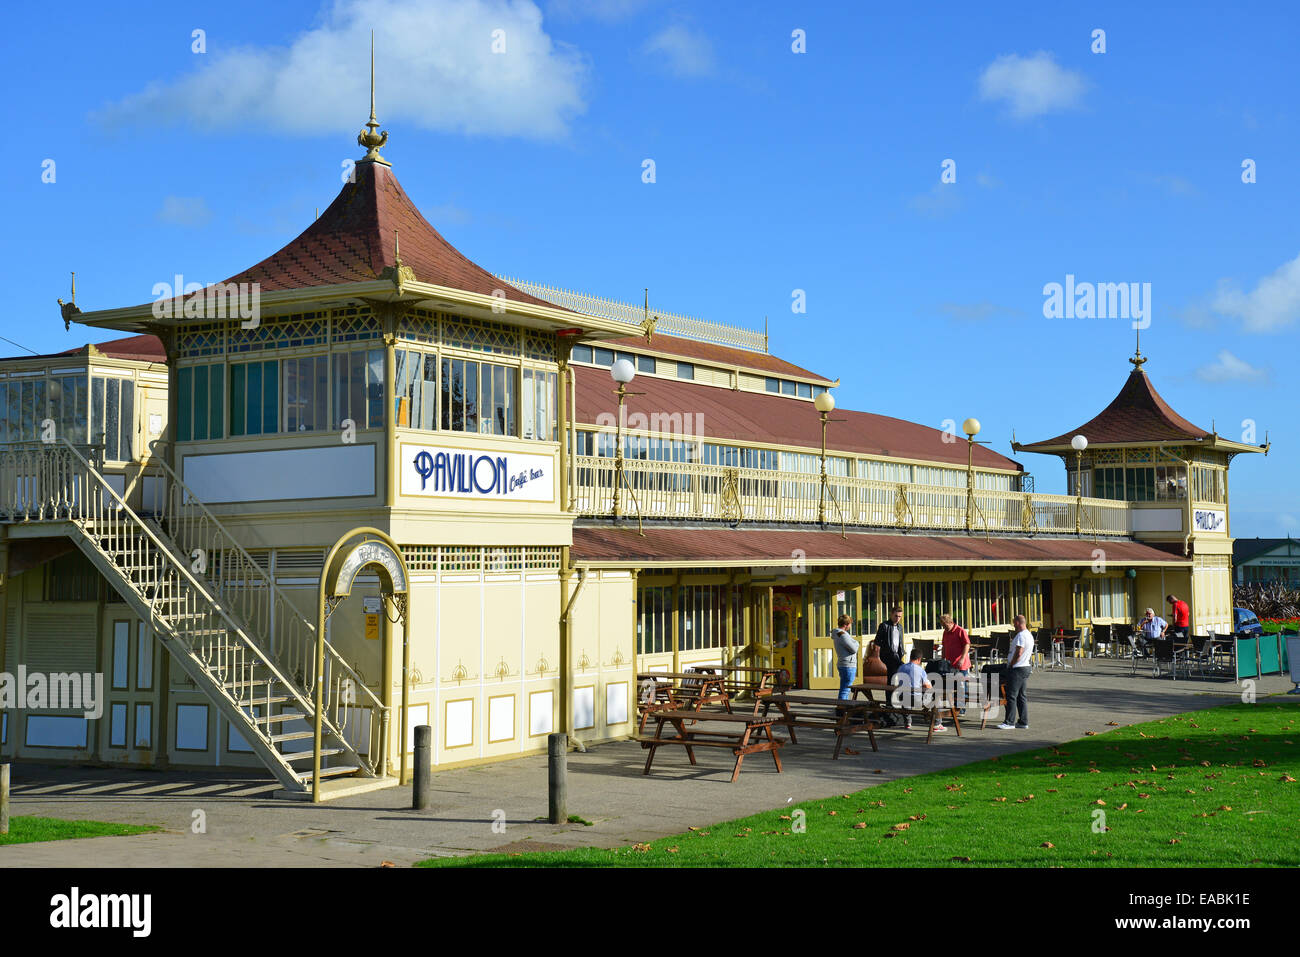 Pavilion Cafe & Bar, ESPLANADE, Ryde, Isle of Wight, England, Regno Unito Foto Stock